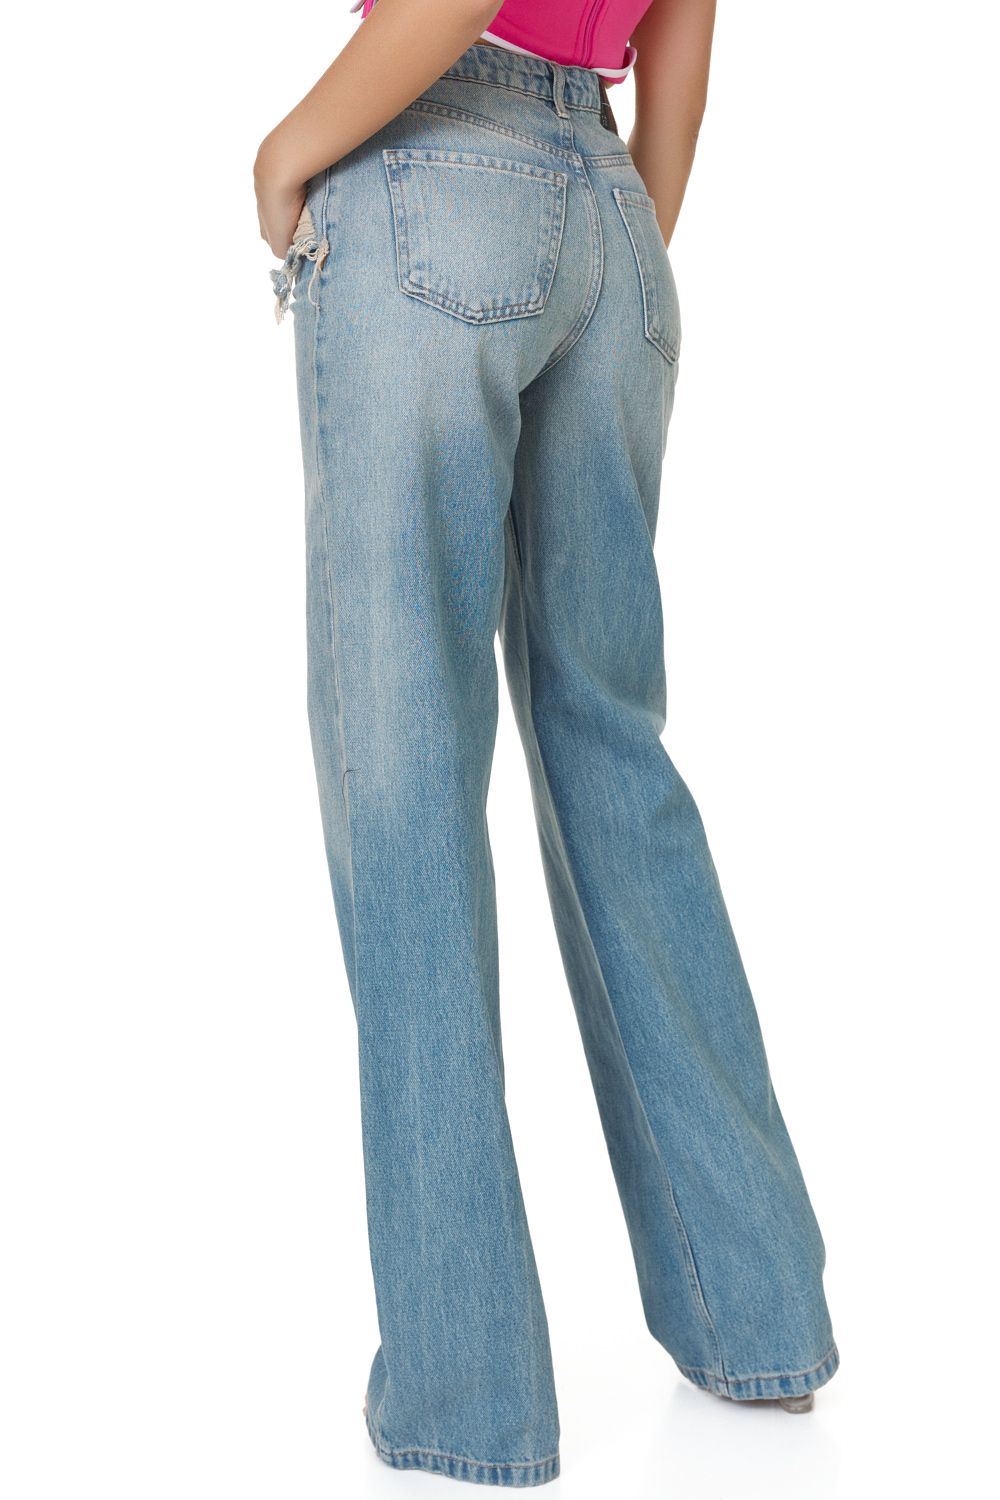 Sistoni Bogas casual blue ladies jeans